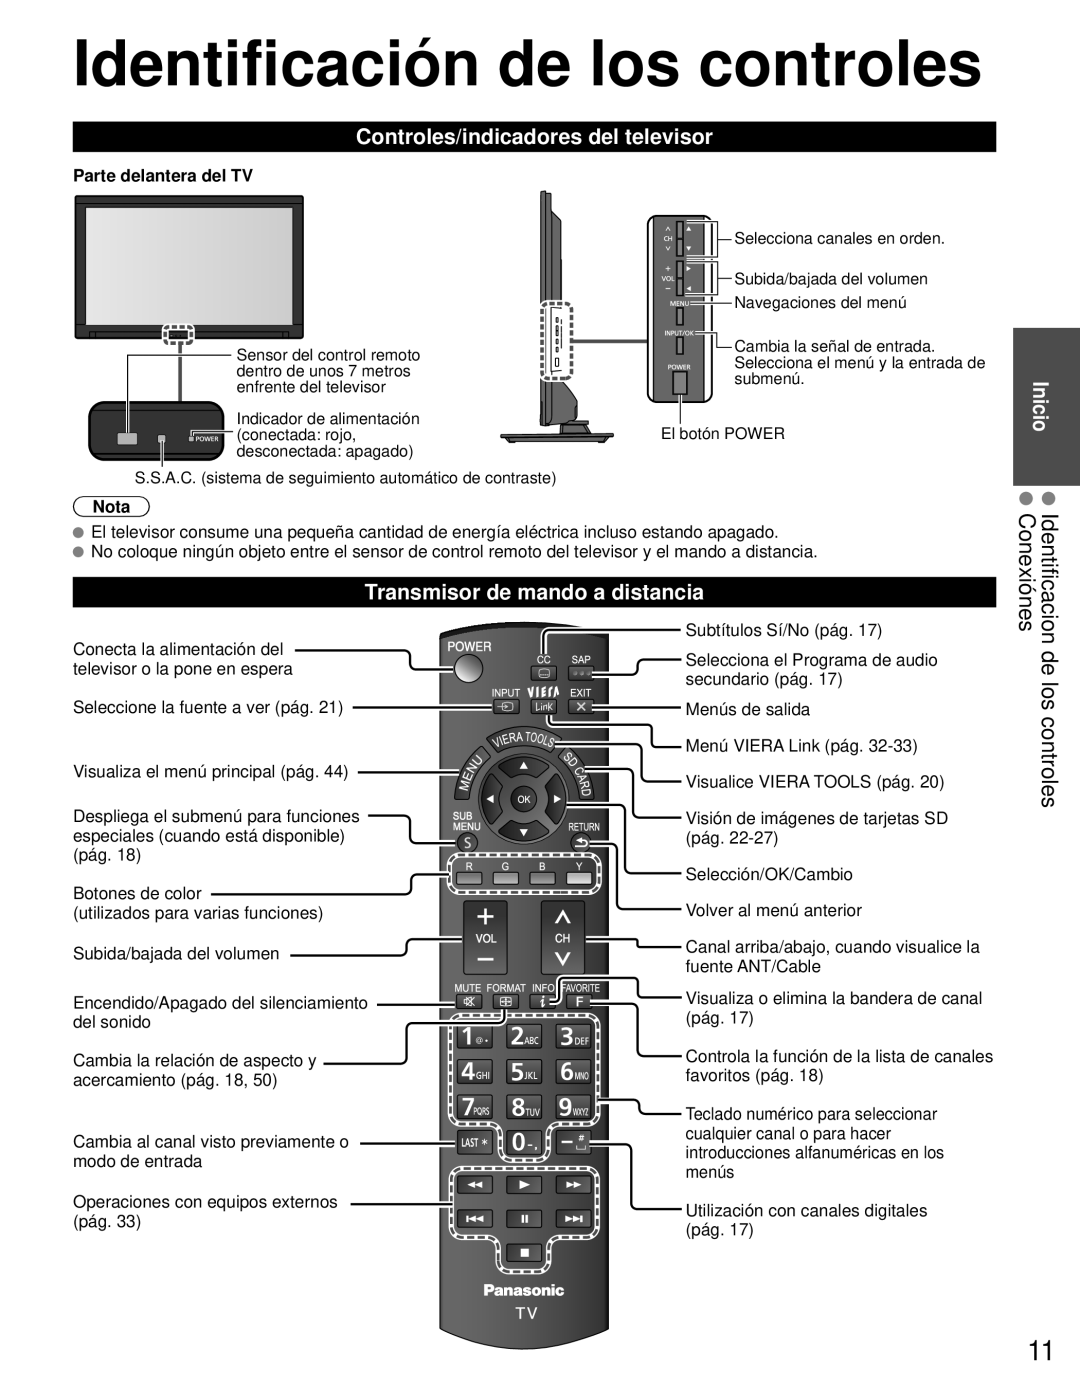 Panasonic TC-L42E3 Identificación de los controles, Controles/indicadores del televisor, Transmisor de mando a distancia 